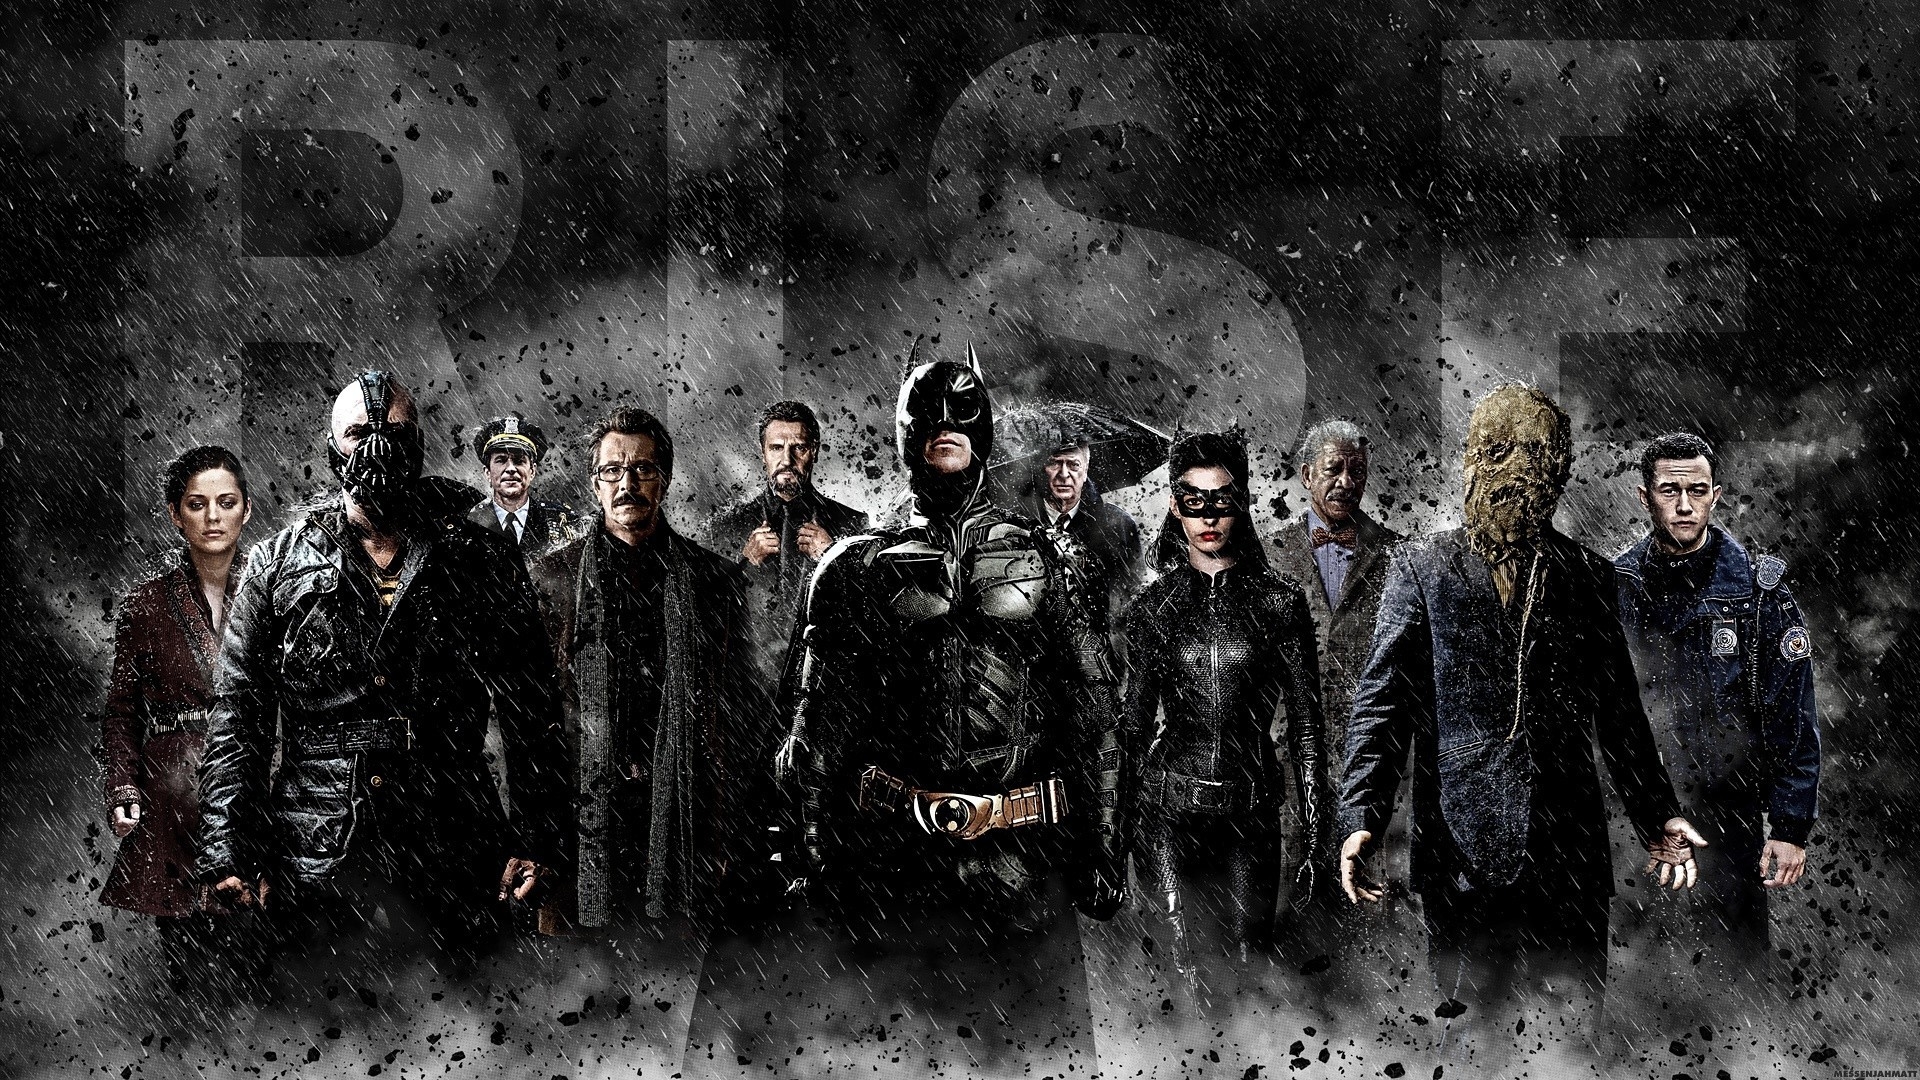 The Dark Knight Rises Cast for 1920 x 1080 HDTV 1080p resolution